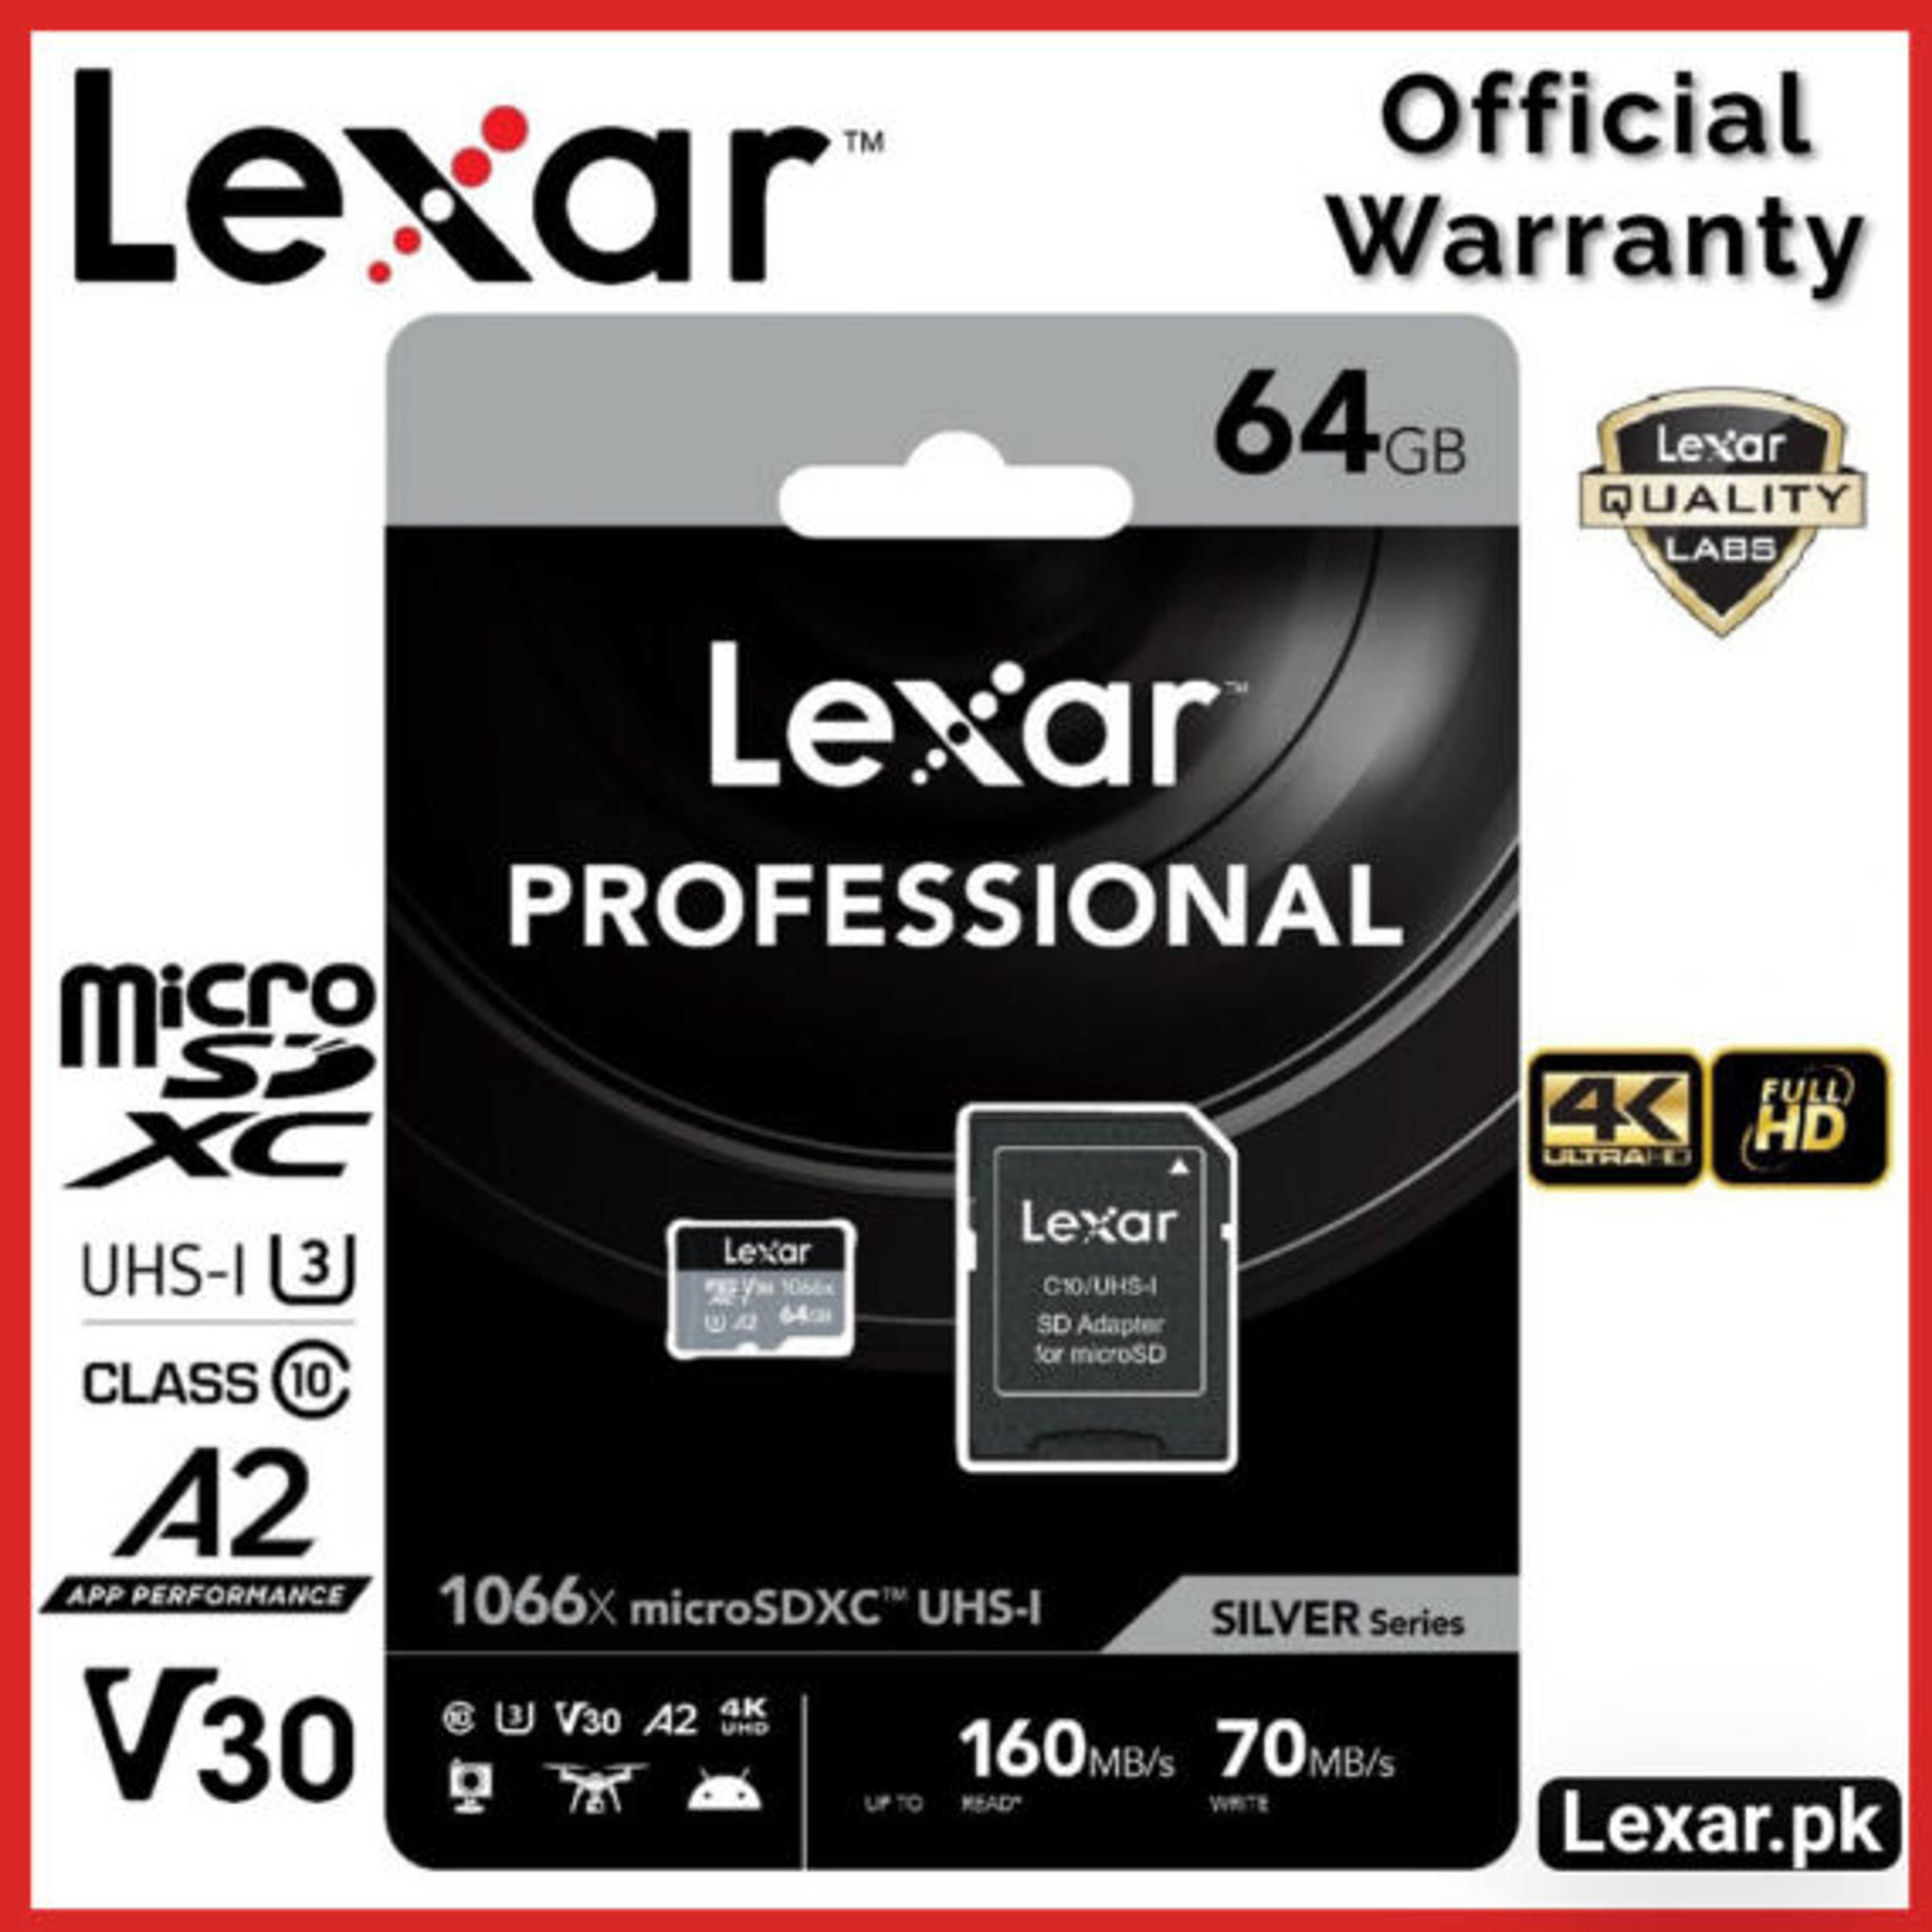 64GB Lexar Professional 1066x microSDXC UHS-I Card SILVER Series